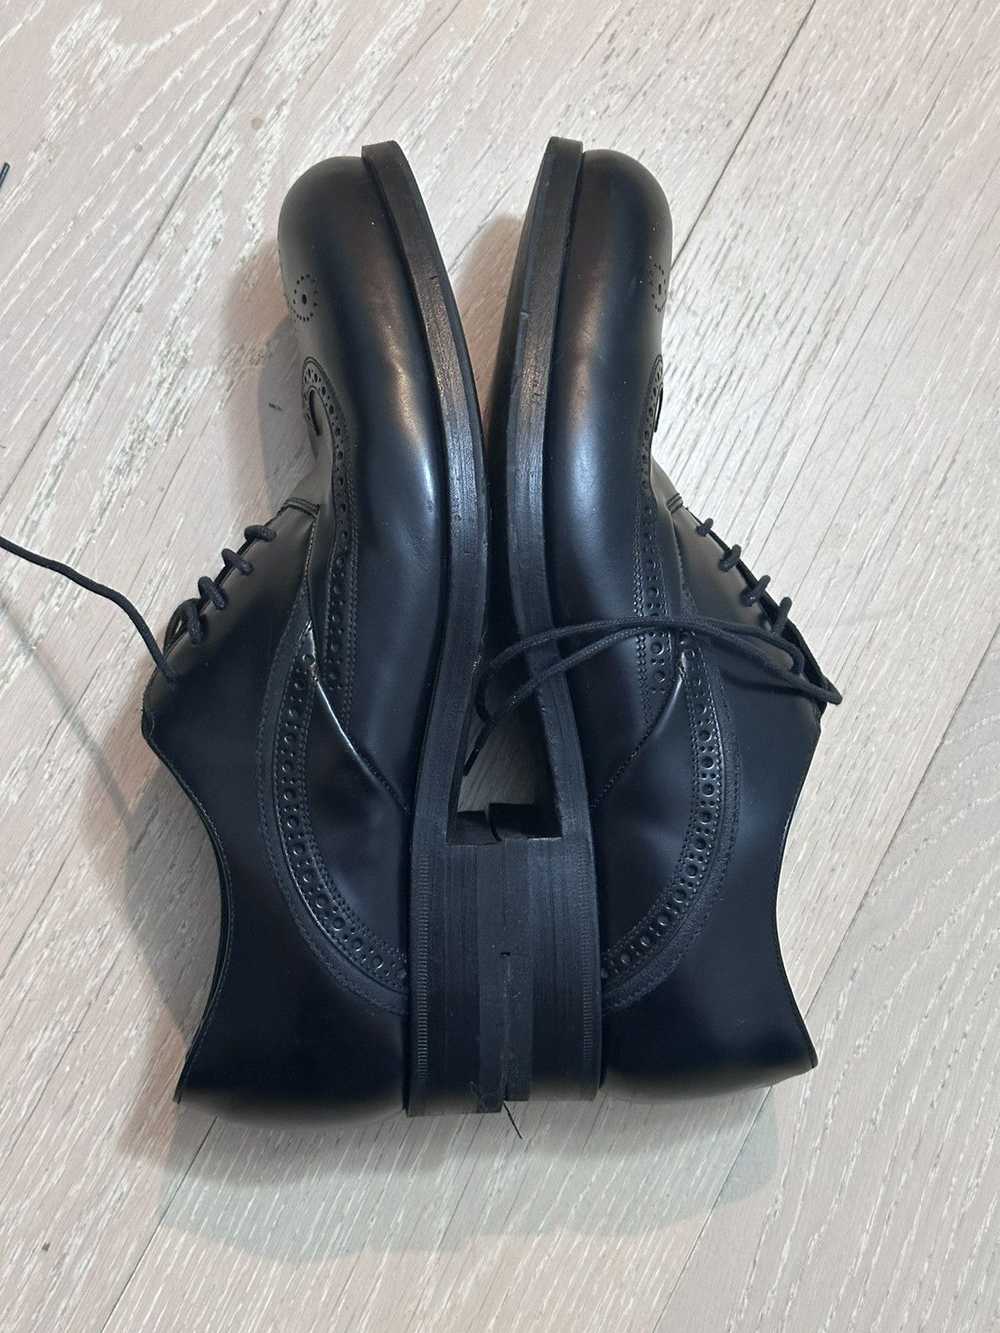 Prada Prada leather dress shoes sz 7 - image 8